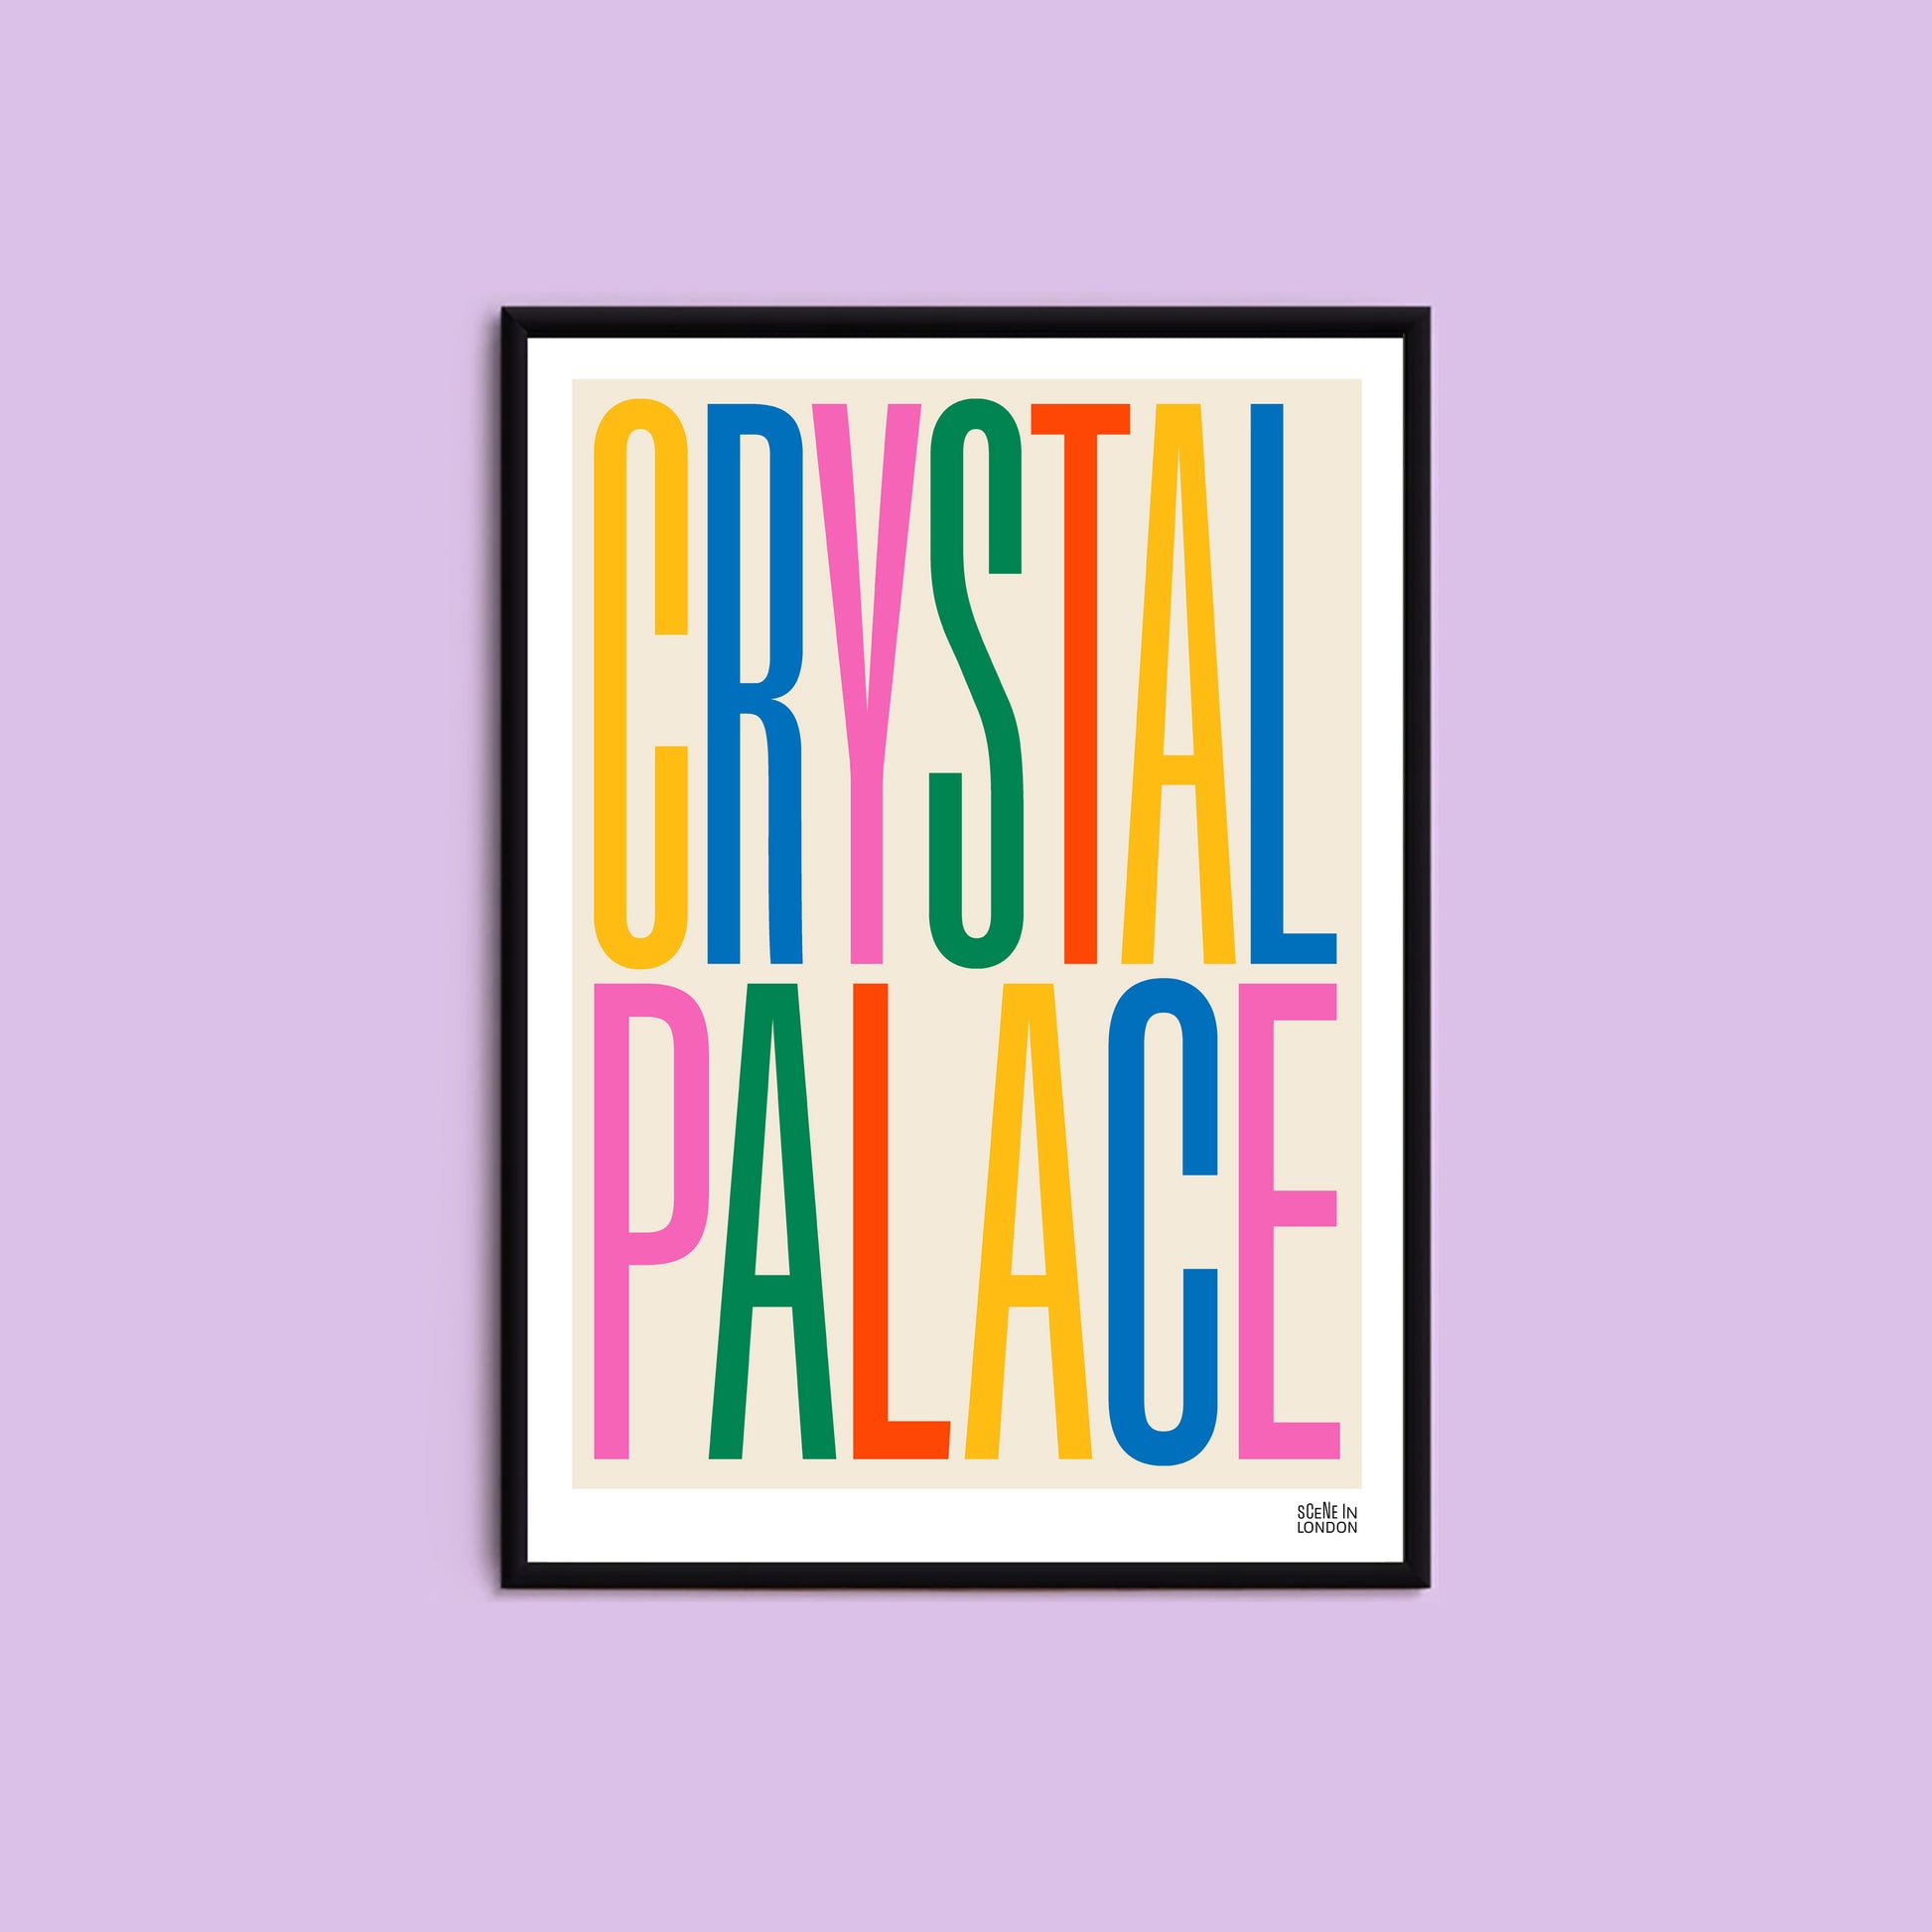 Crystal Palace contemporary print